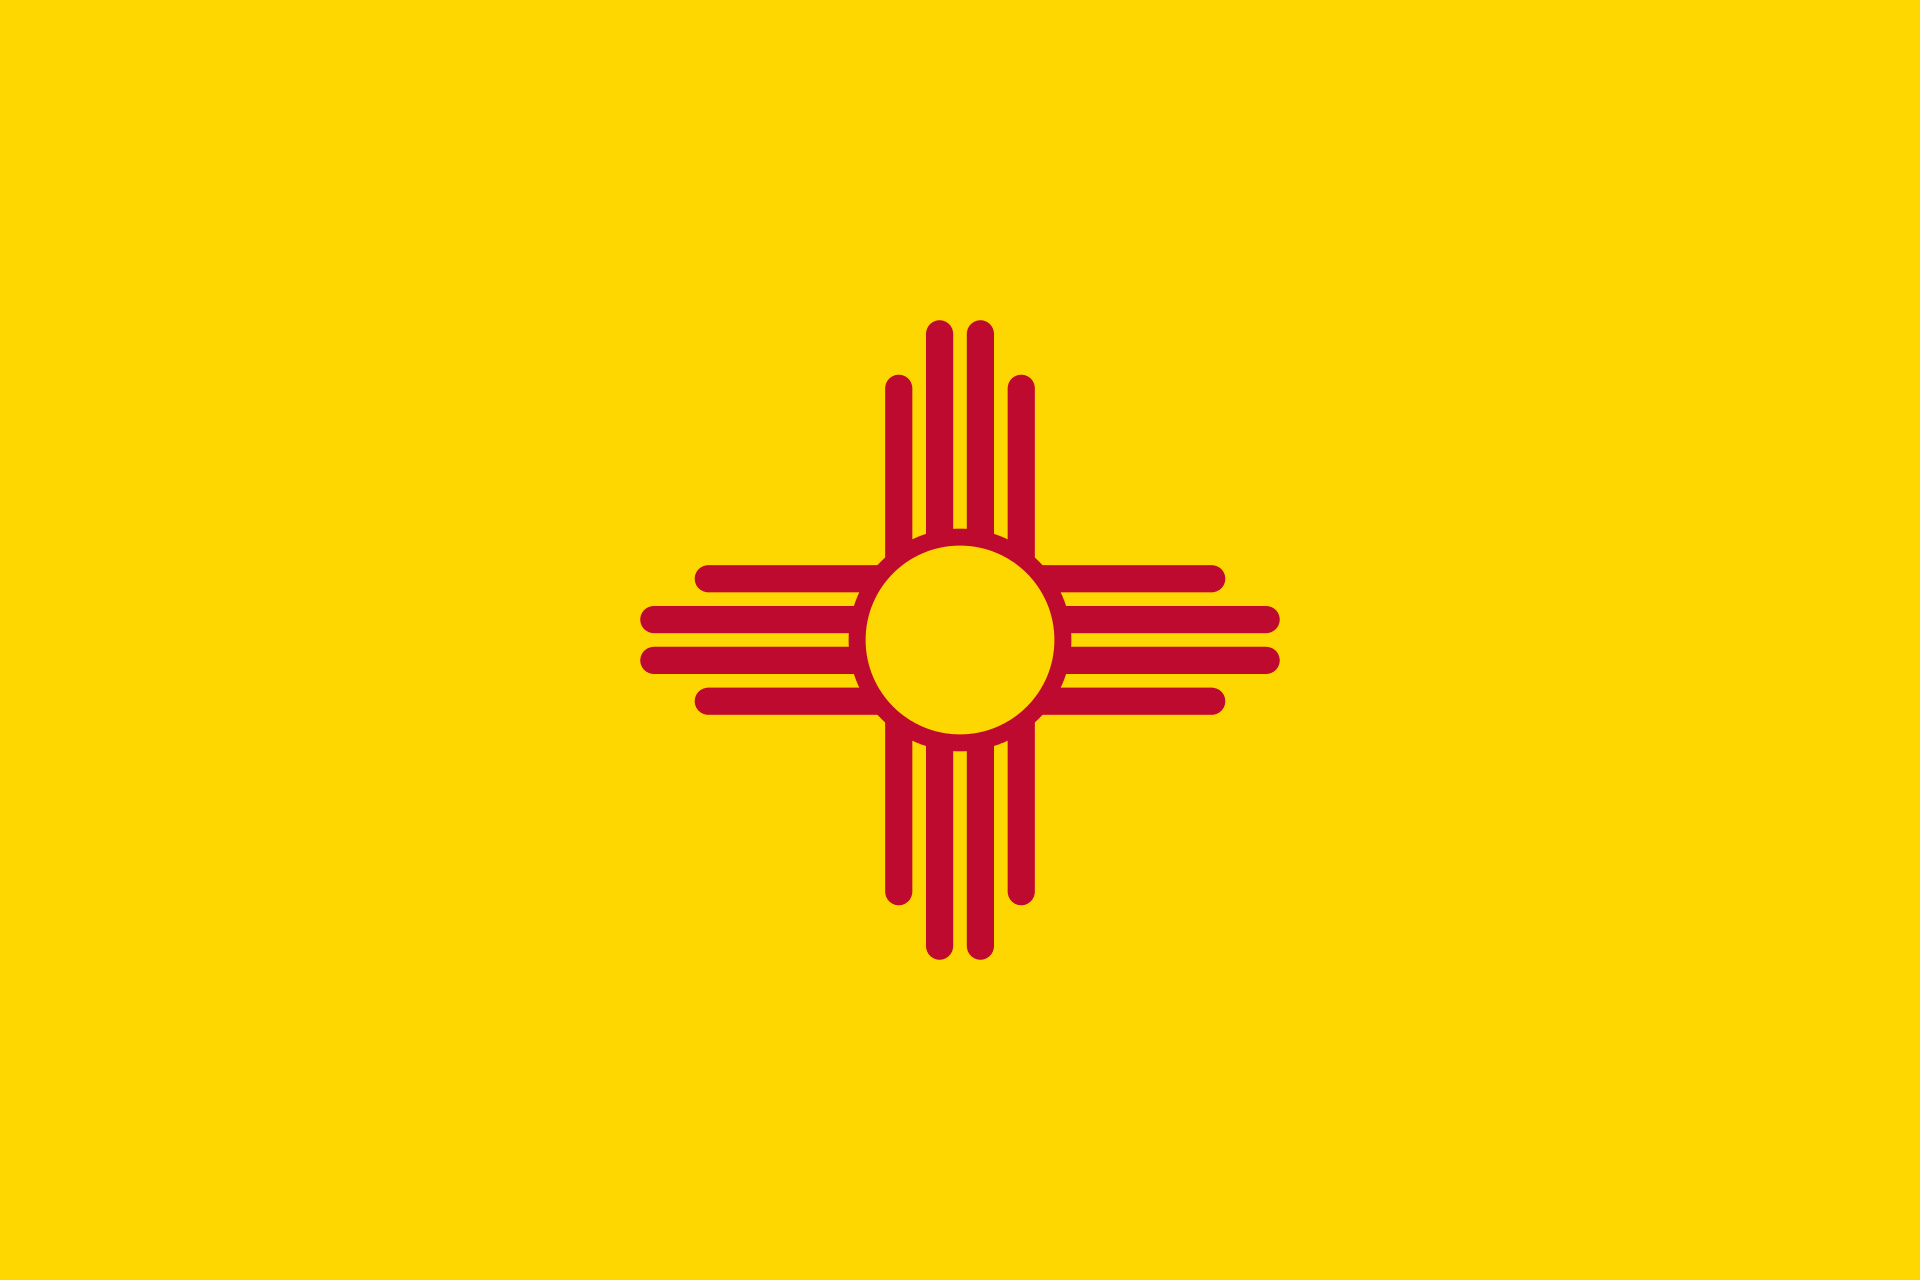 New Mexico - Wikipedia